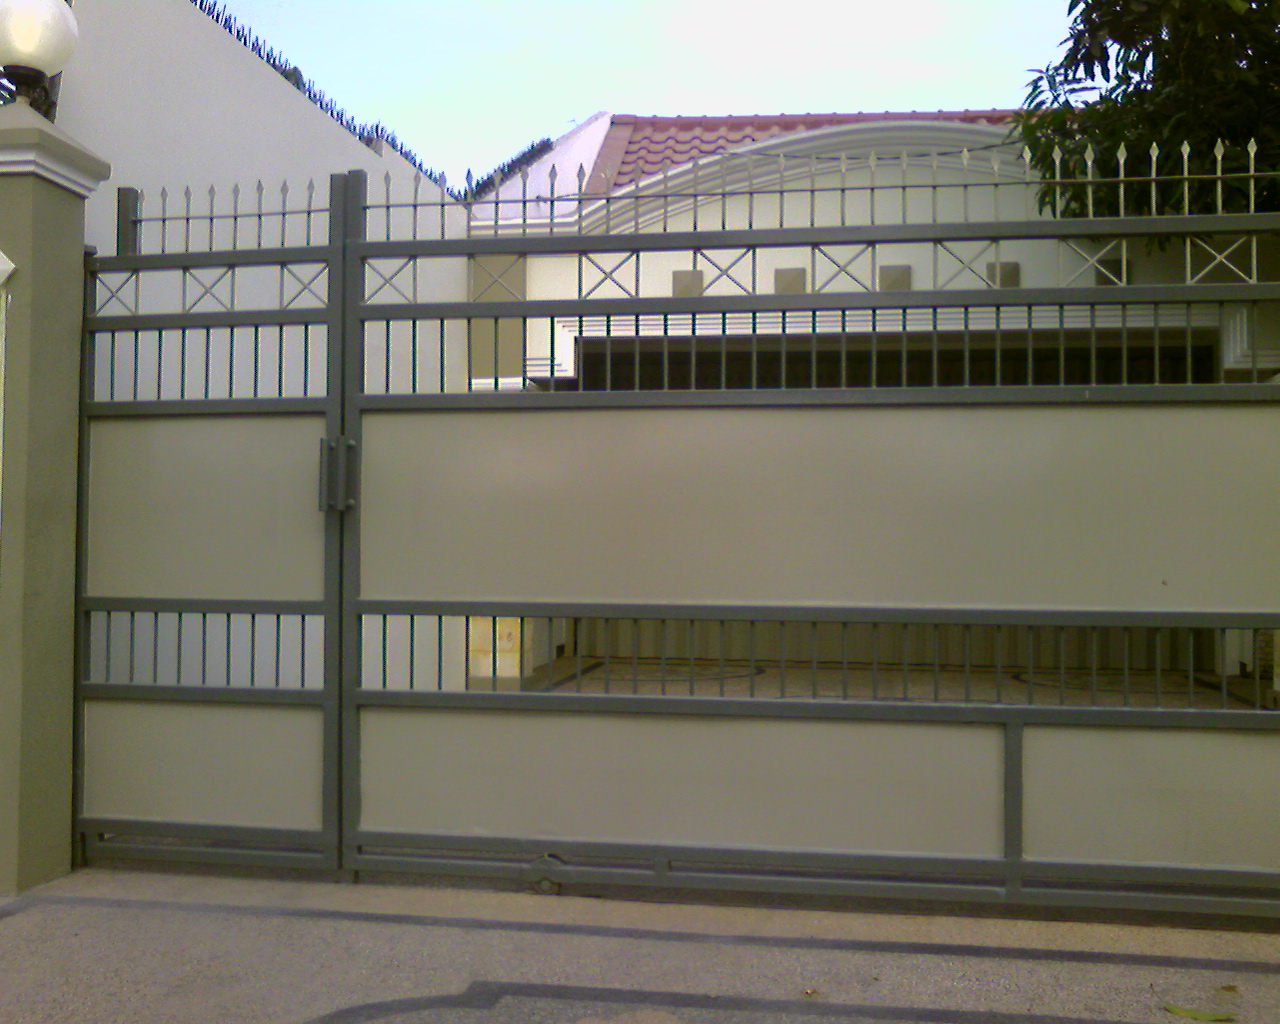 Hampir di setiap rumah diperumahan menengah dan atas pagarnya bertema minimalis  modern